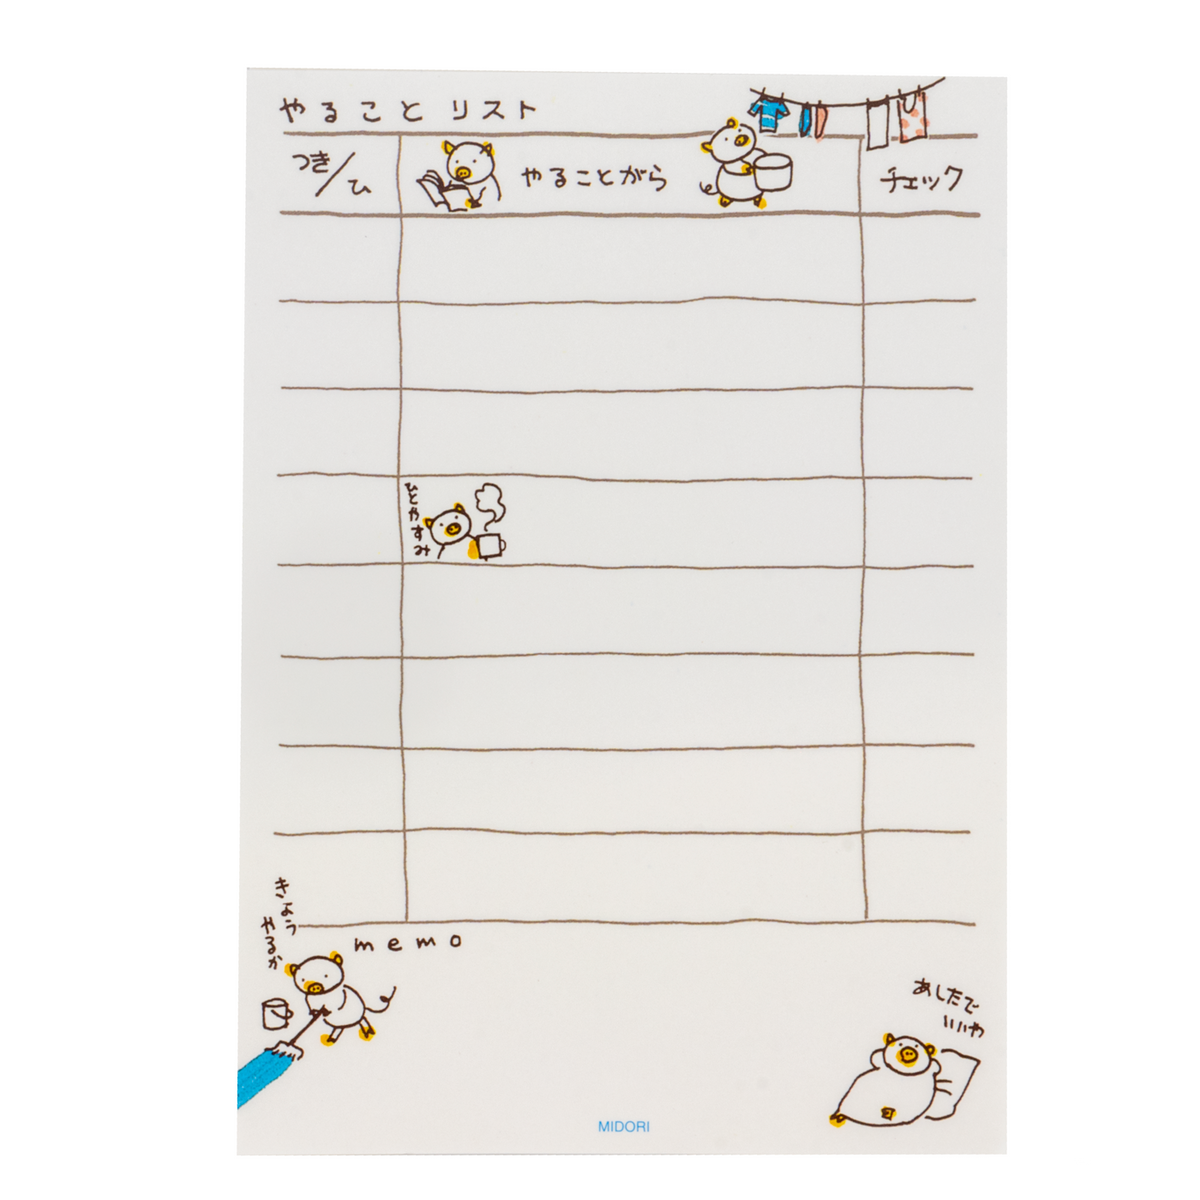 Midori Memo Pad - To Do List - Pig